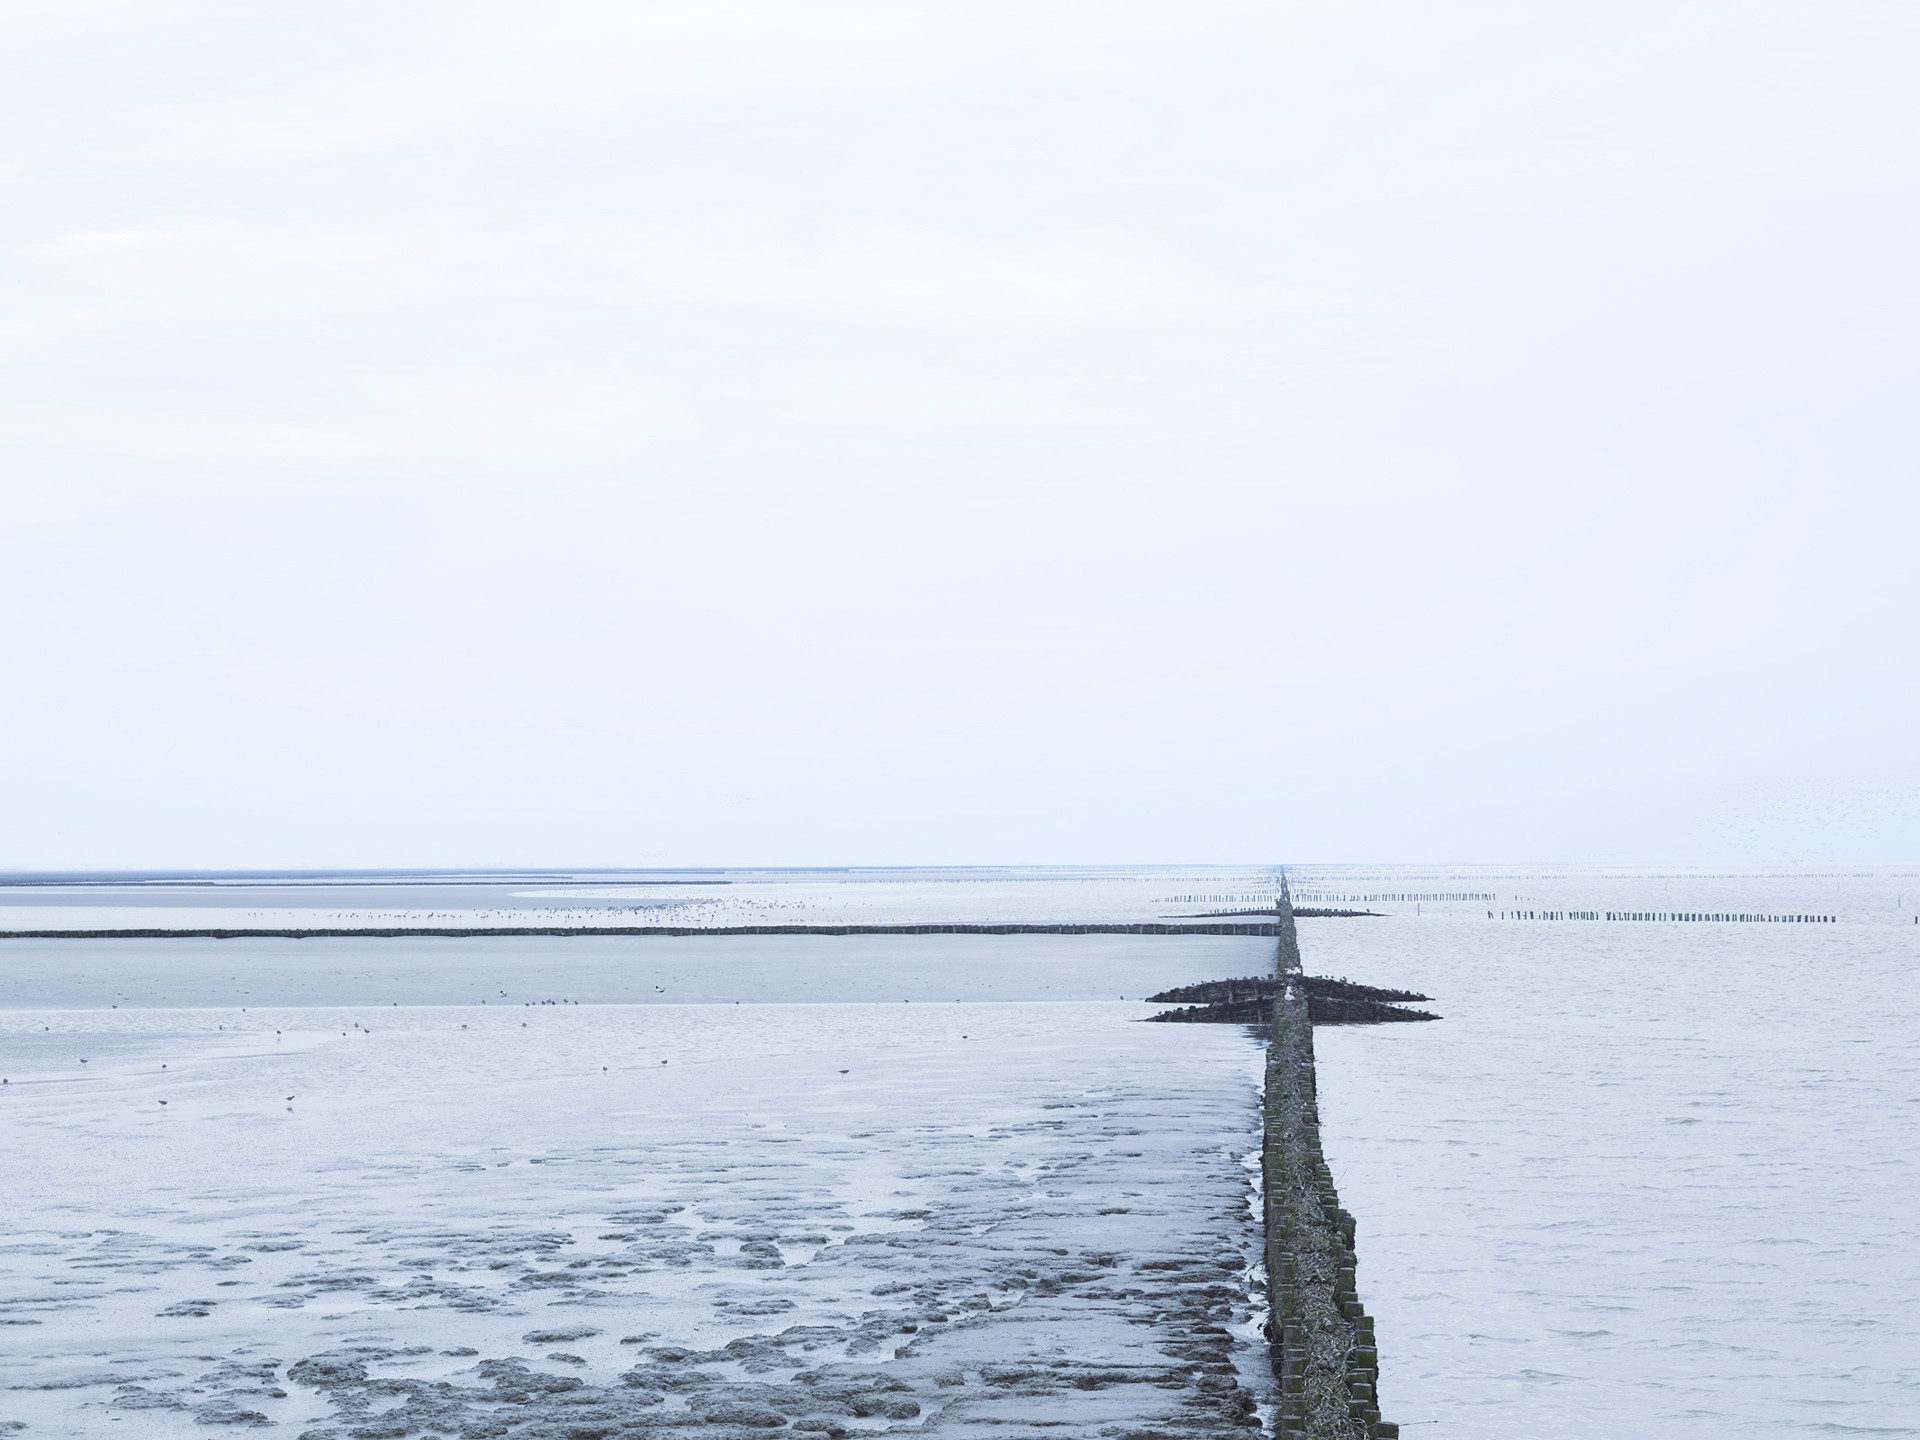 North Sea, Netherlands by David Burdeny